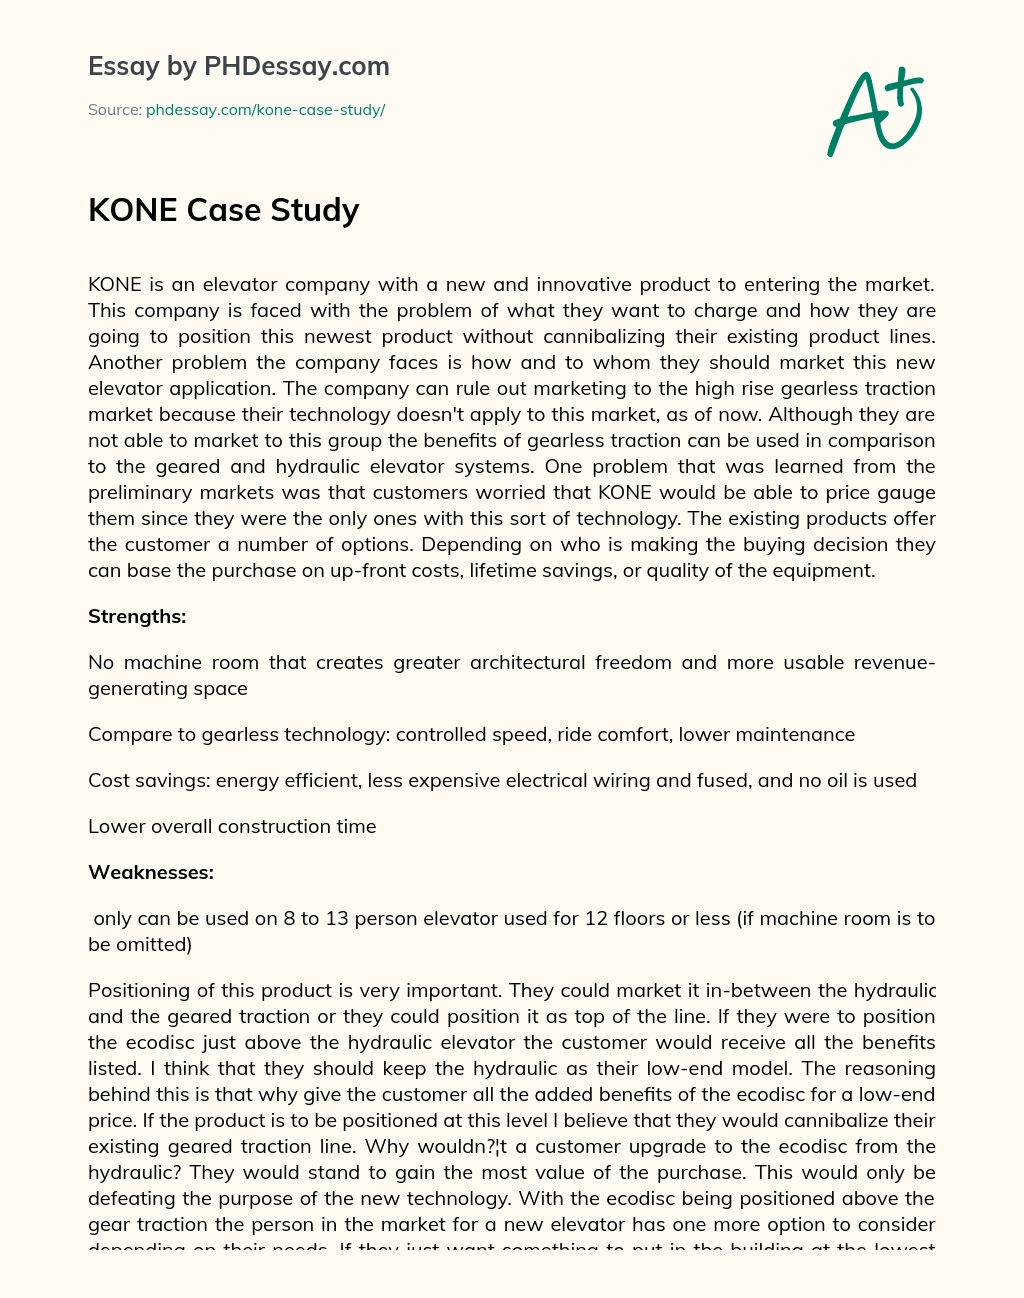 KONE Case Study essay